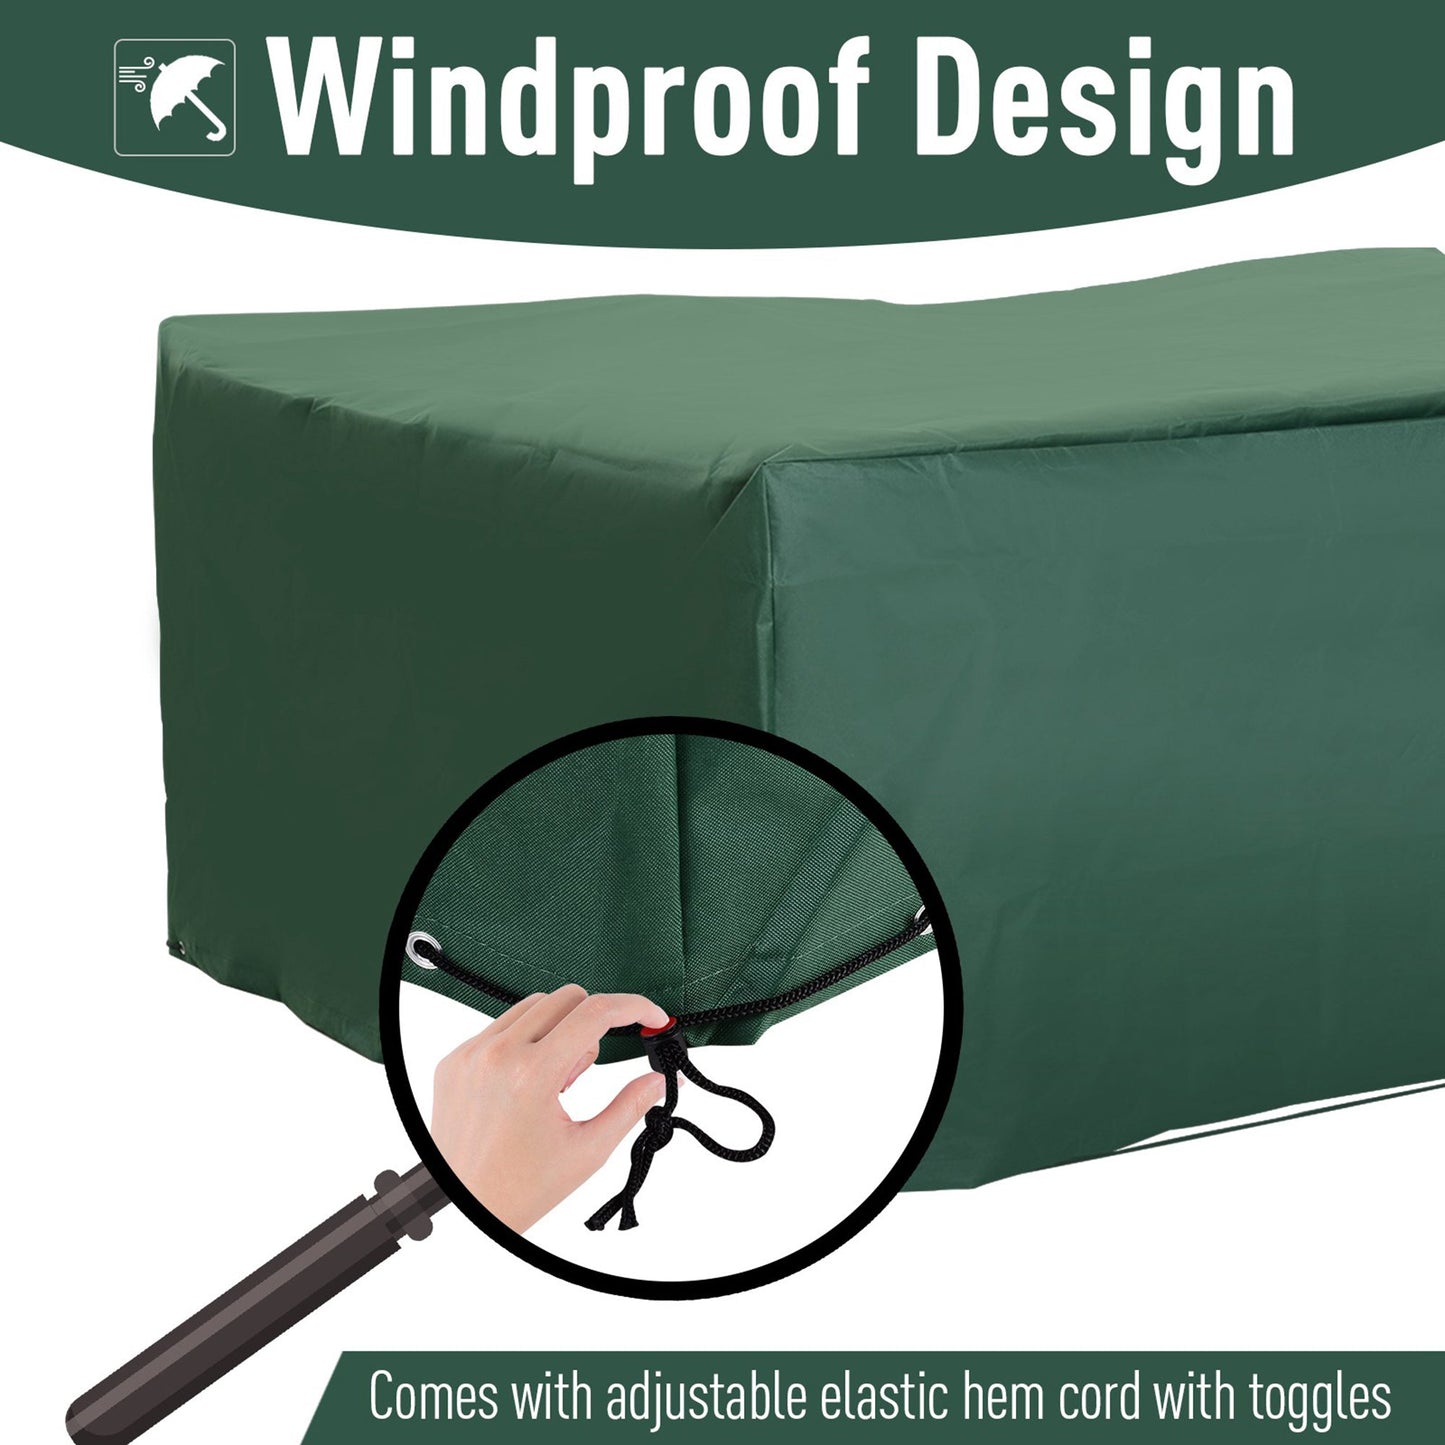 Patio Furniture Set Cover Waterproof Garden Outdoor Rattan Wicker UV Rain Protector (Dark Green, 83”x55”) at Gallery Canada